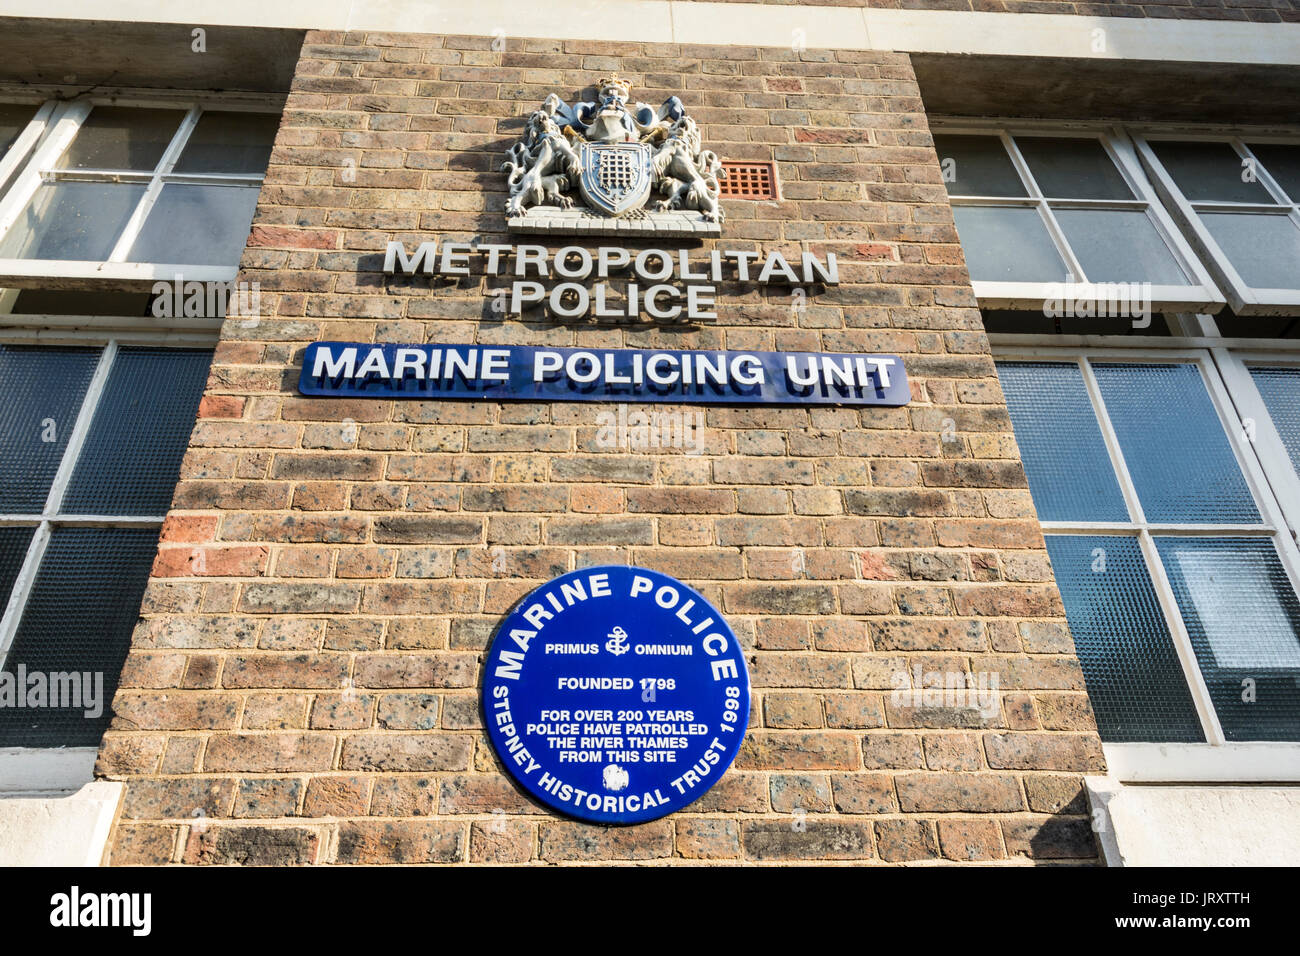 Metropolitan Police Marine Policing Unit Headquarters in Wapping, Stepney, London, UK Stock Photo